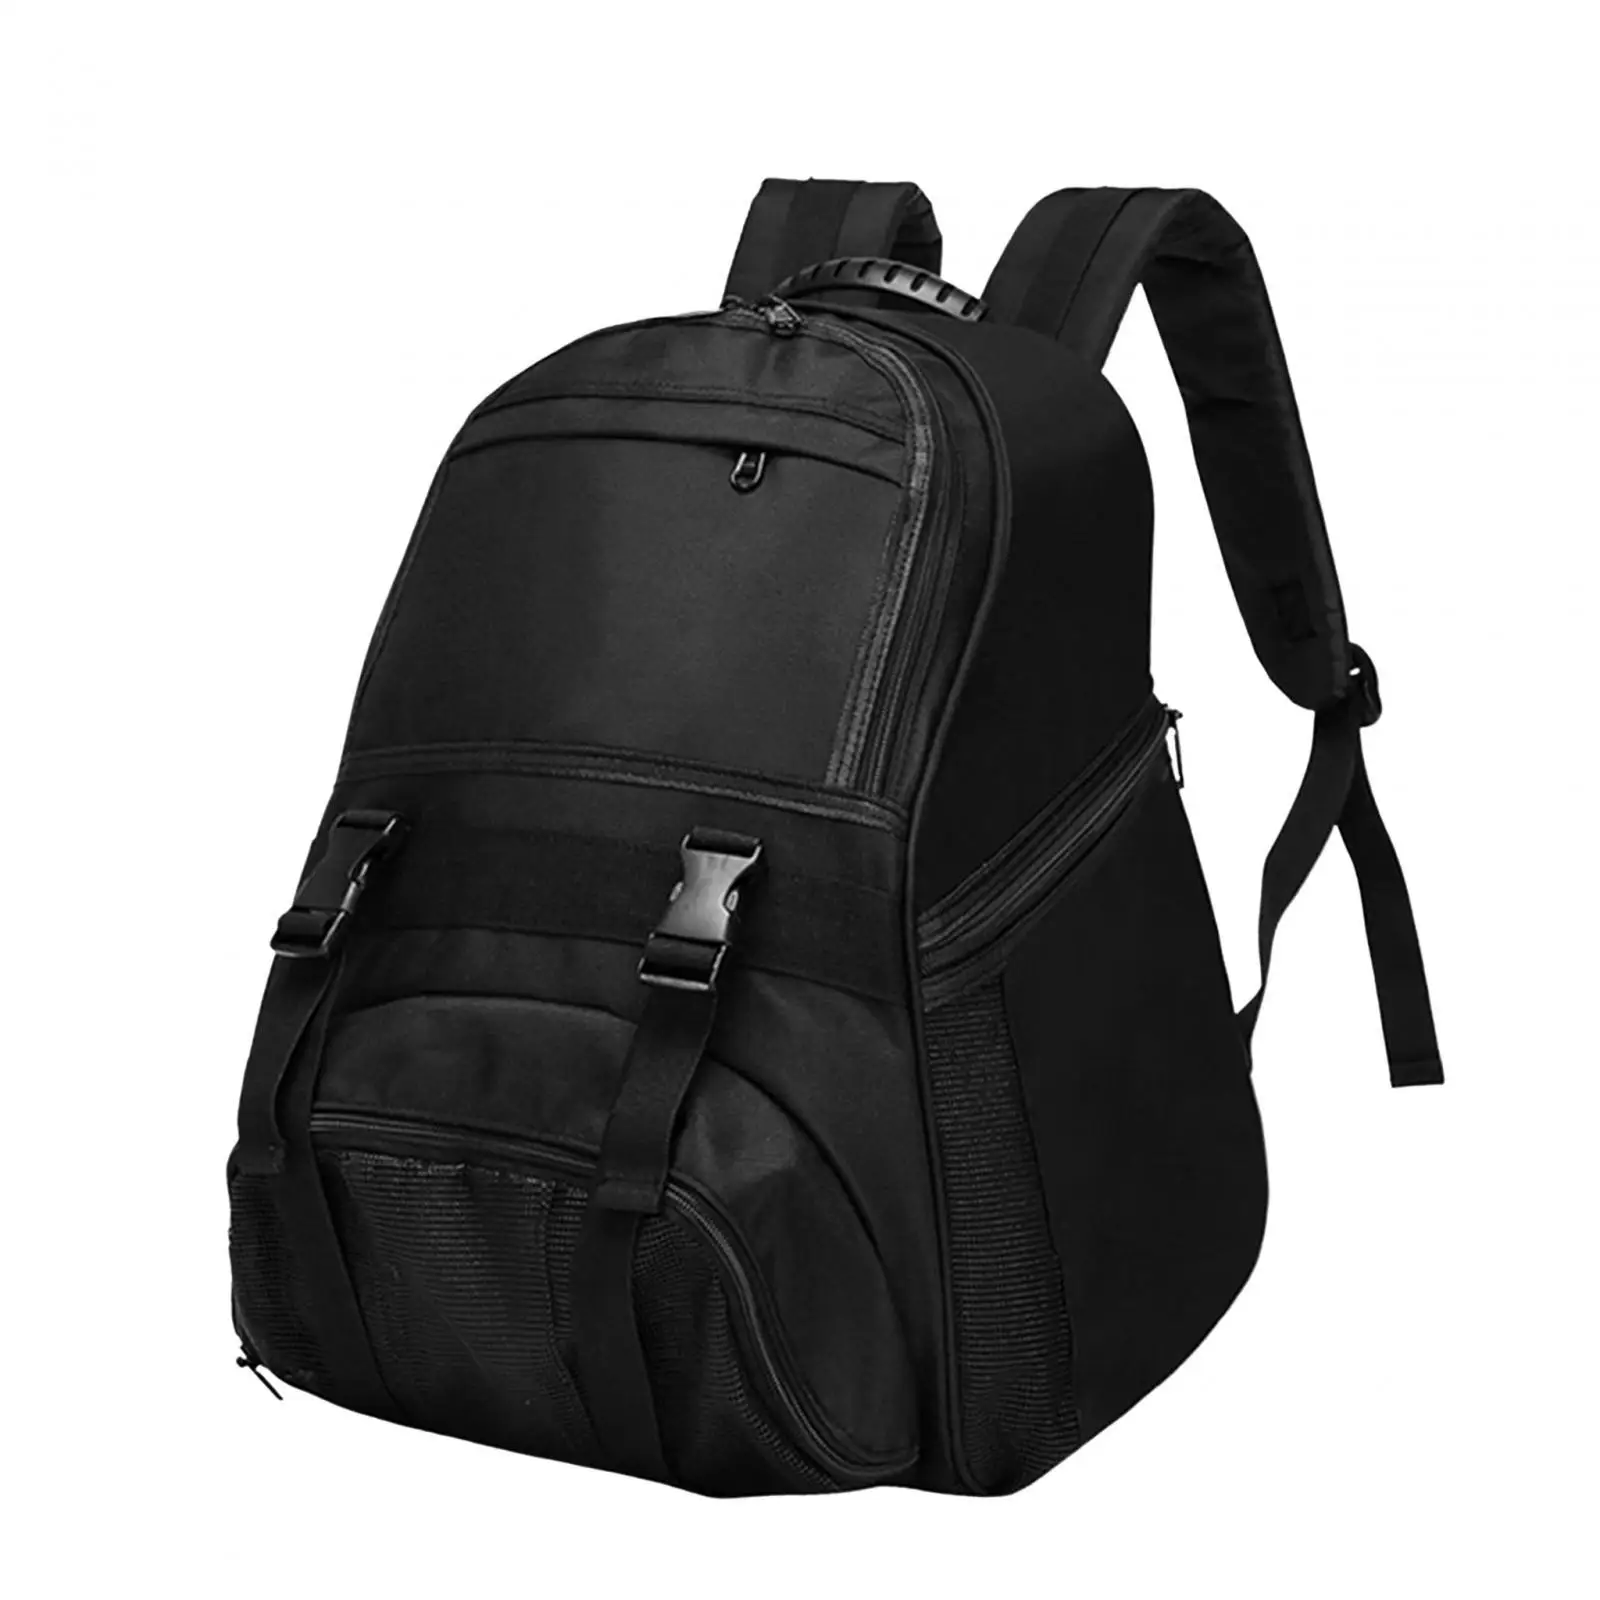 Basketball Backpack Adjustable Shoulder Straps Gym Bag Sport Game Ball Storage Bag for Volleyball Football Rugby Ball Basketball